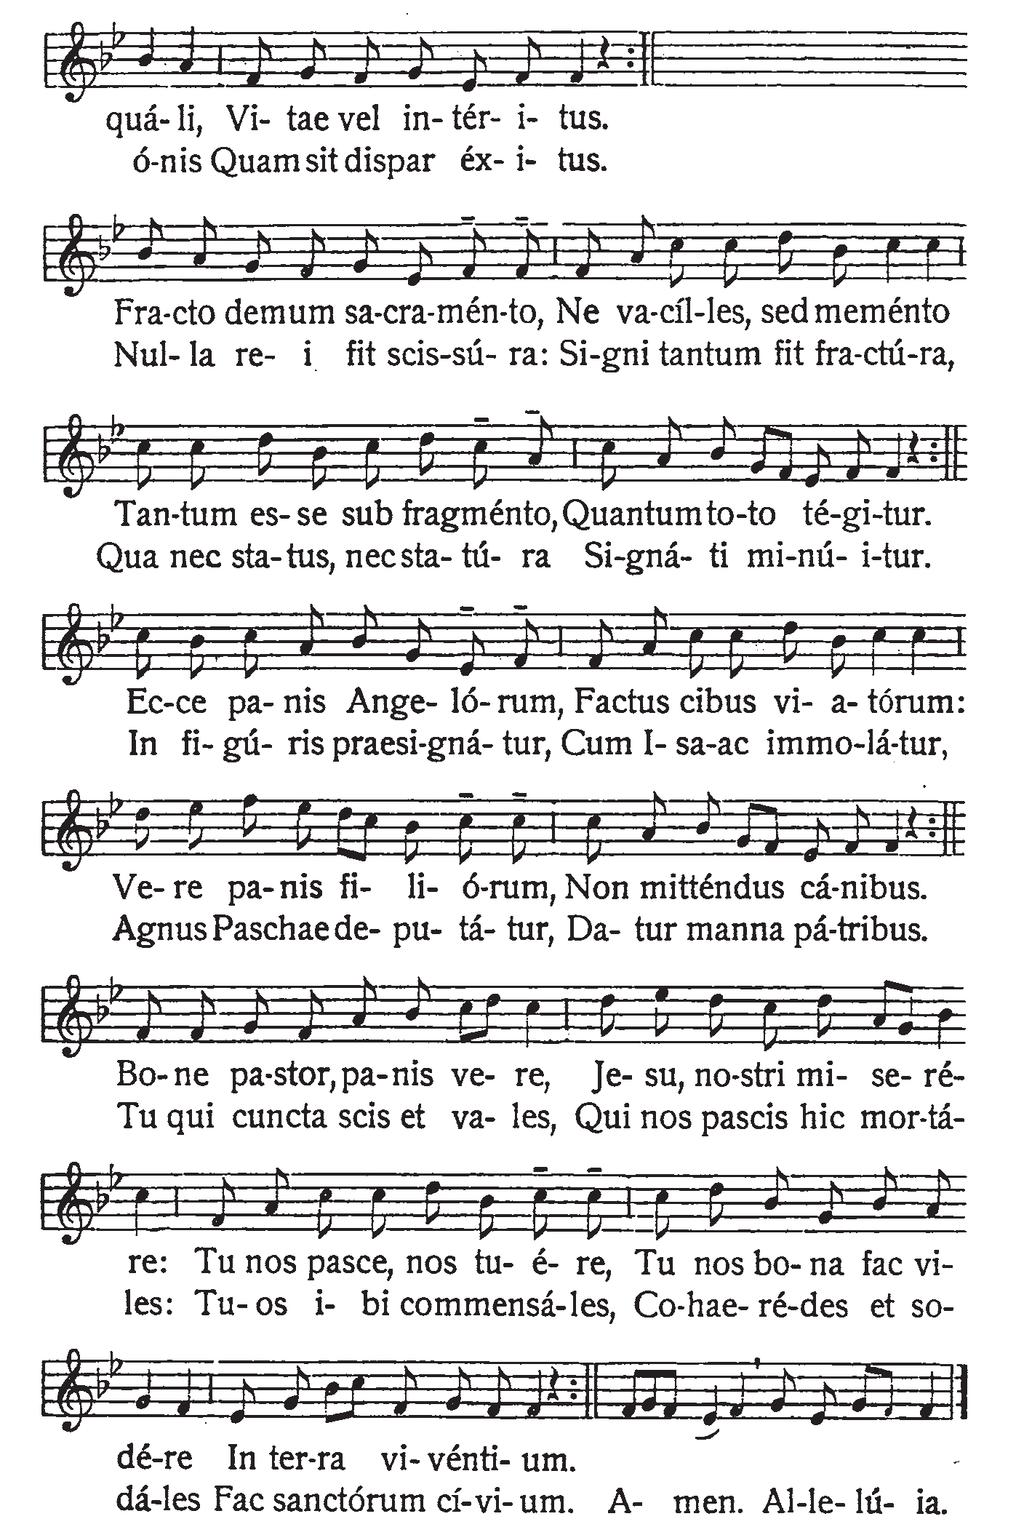 Thousands of Gregorian chant scores,